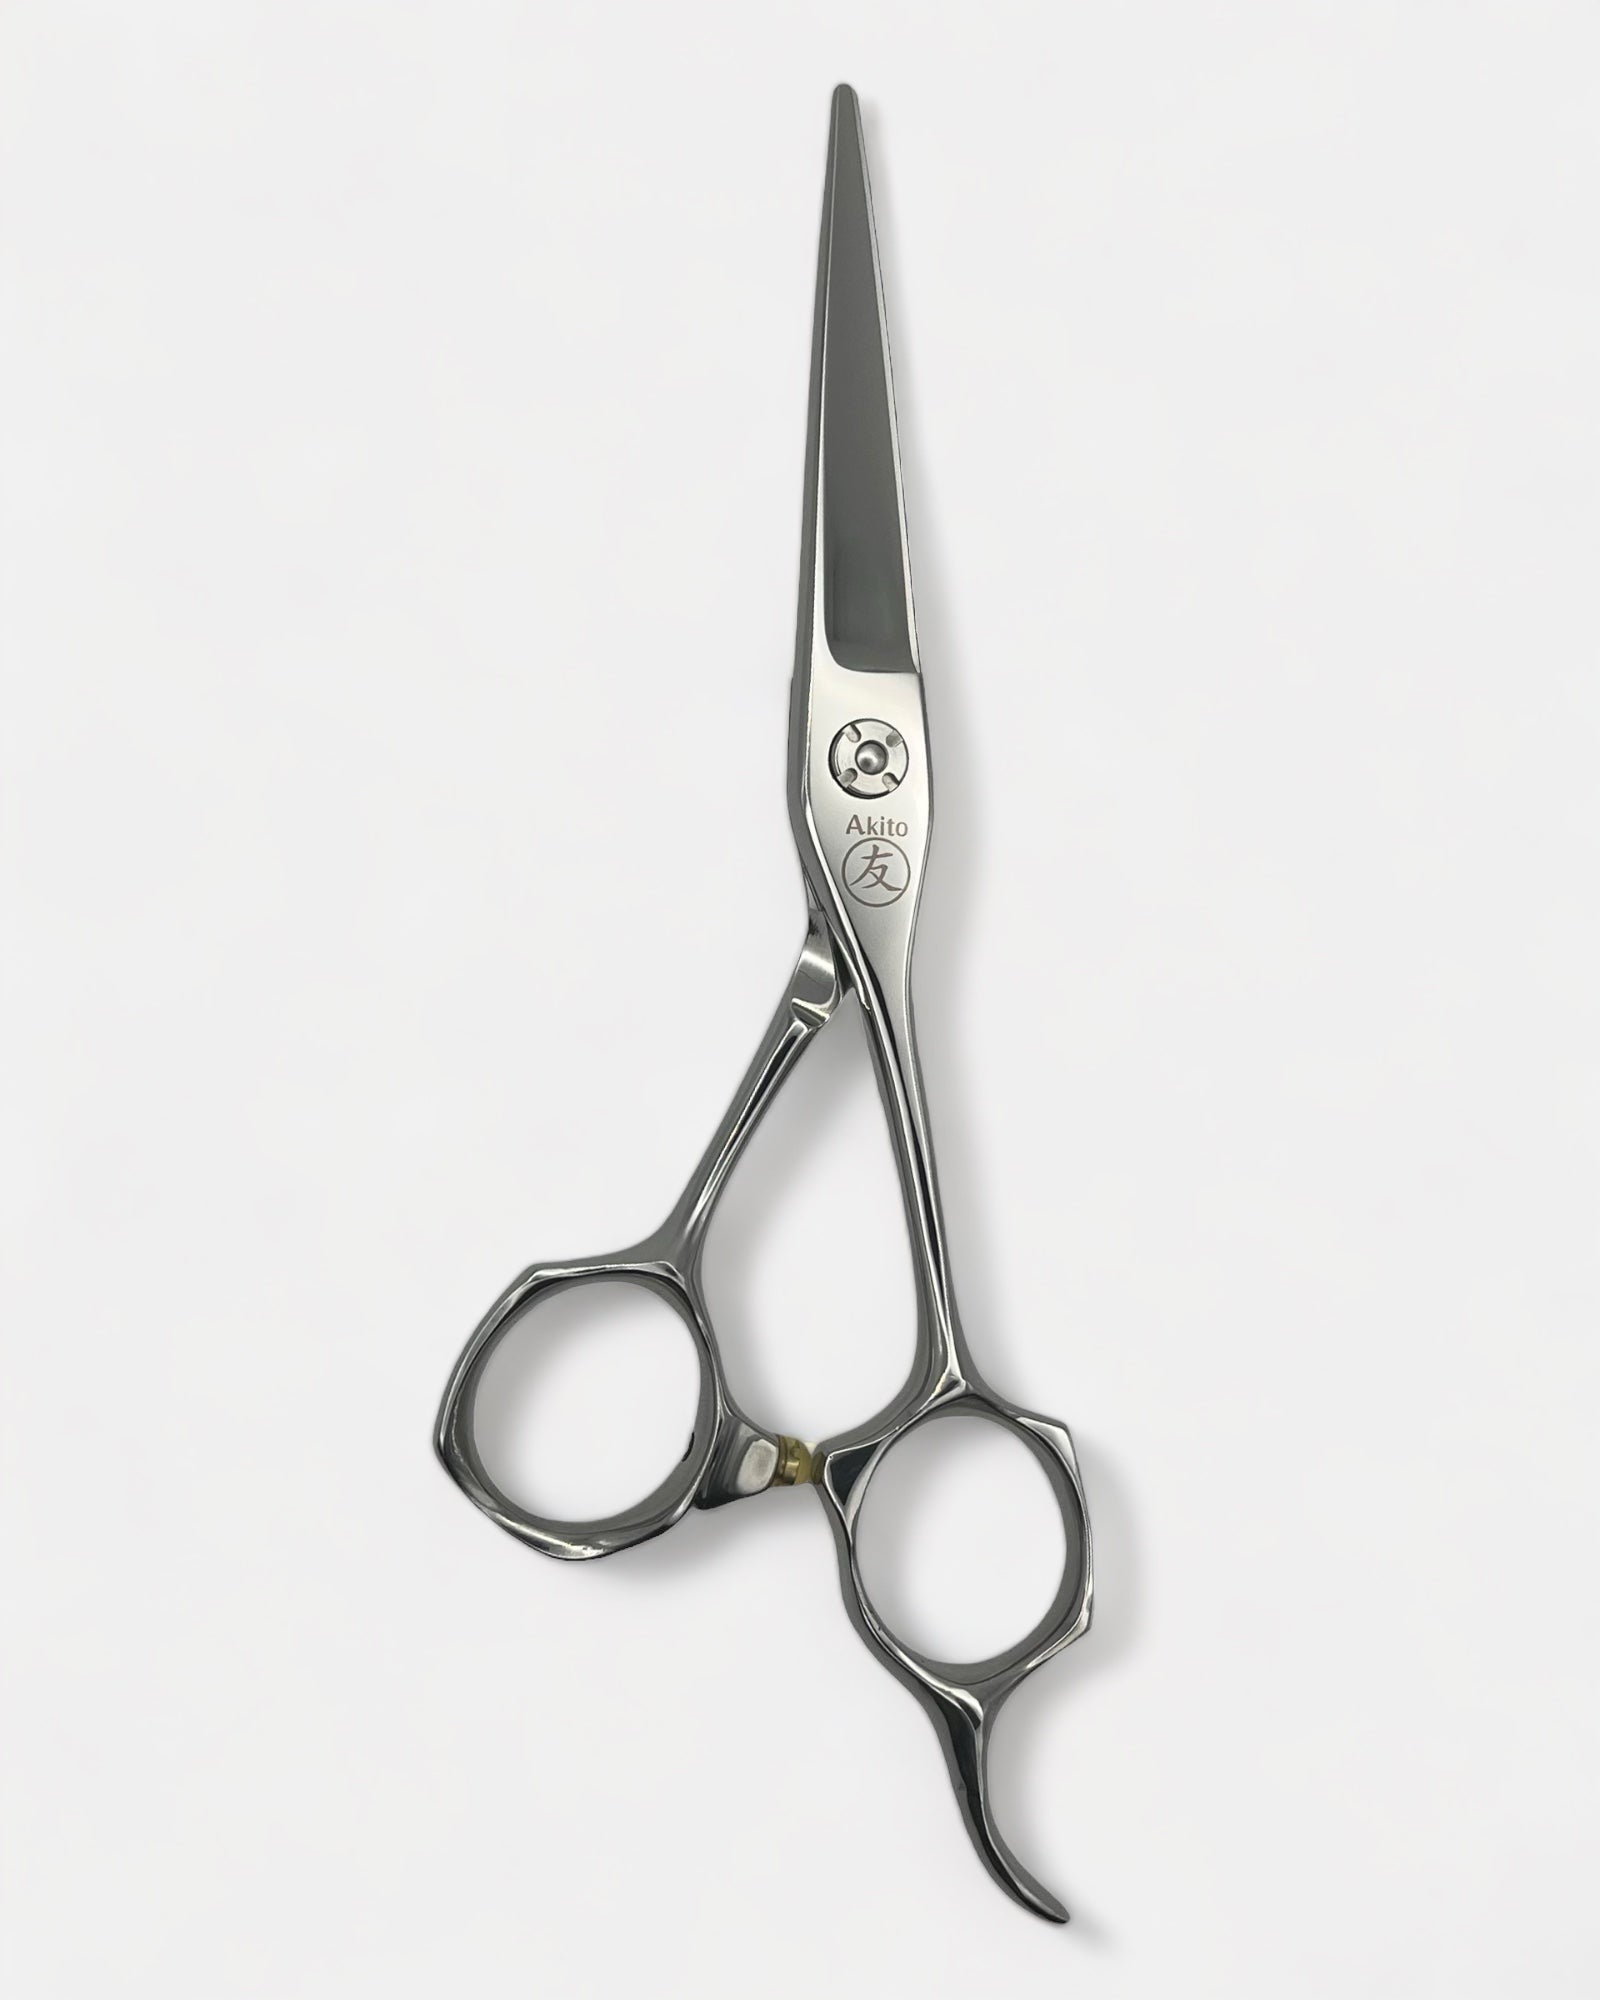 Okami Hairdresser Scissors in 5.5" on grey background